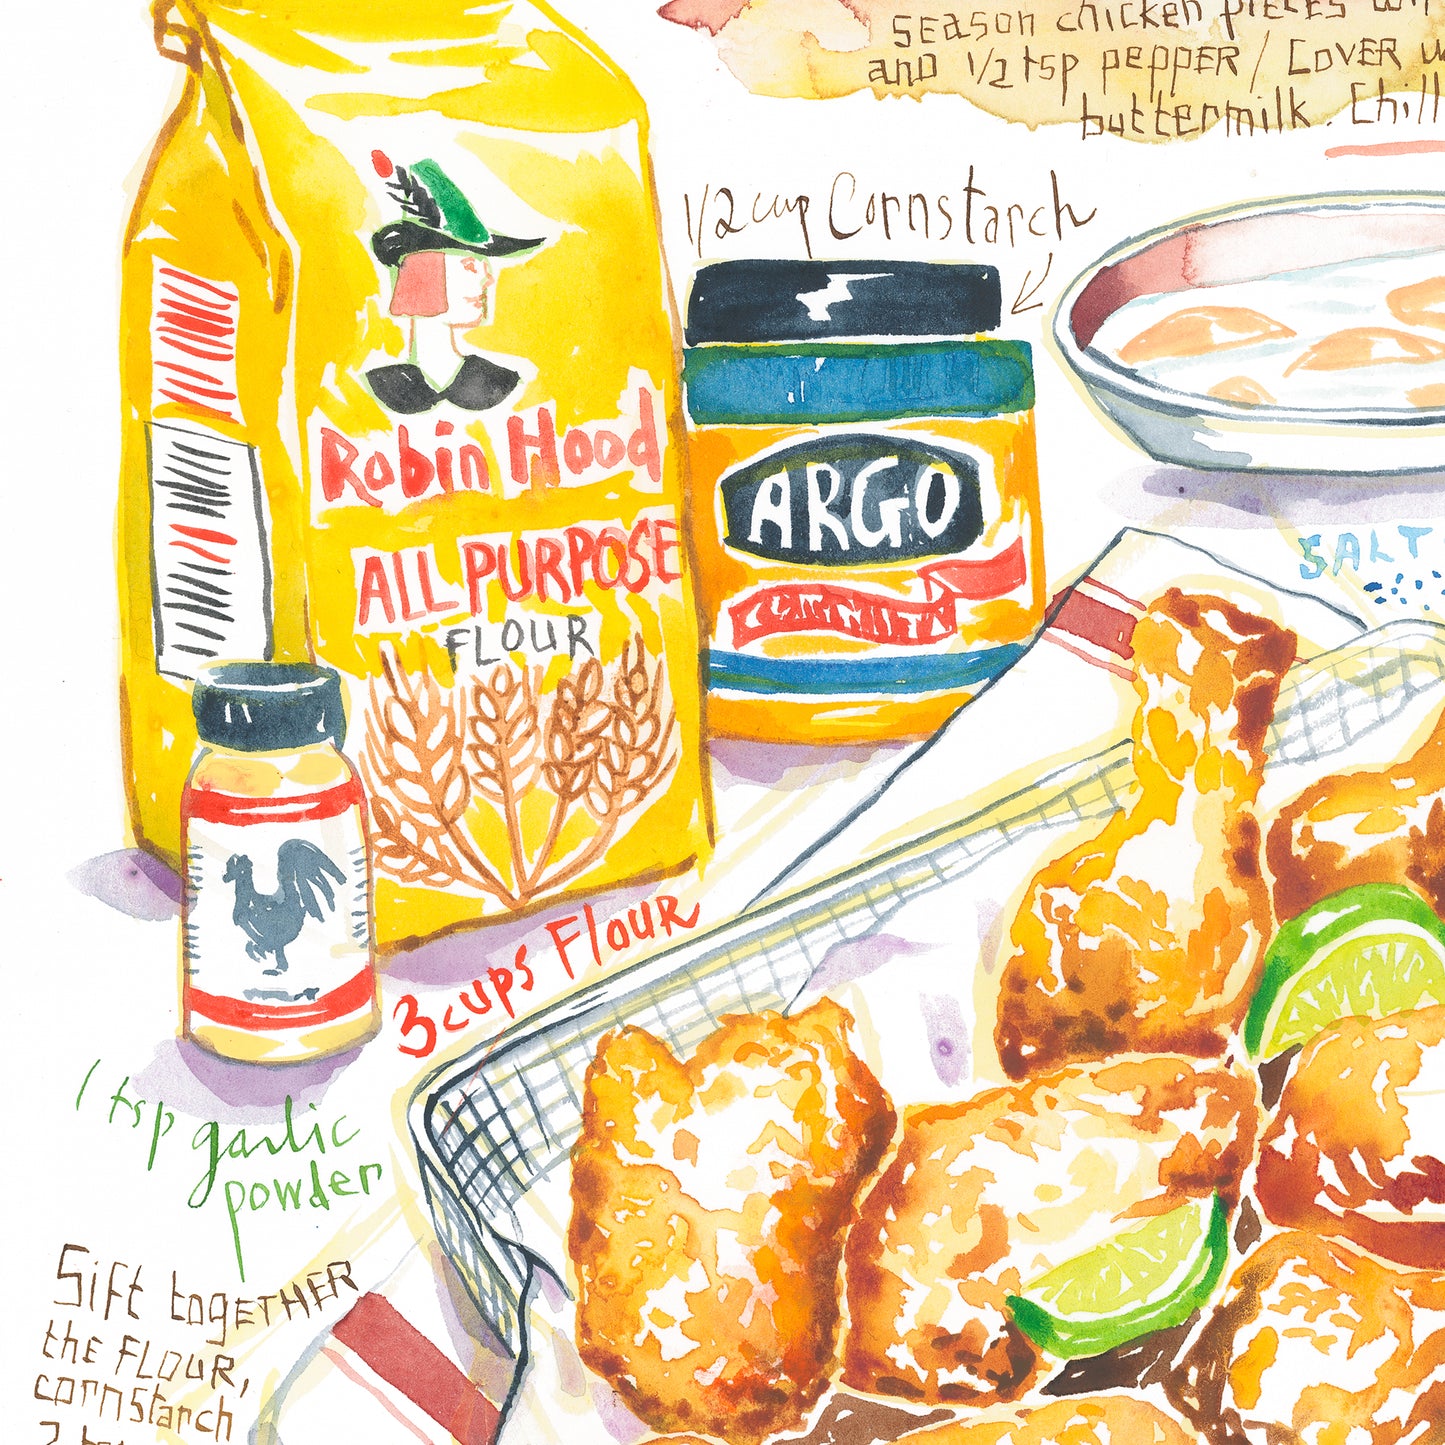 Fried Chicken recipe. Original watercolor painting